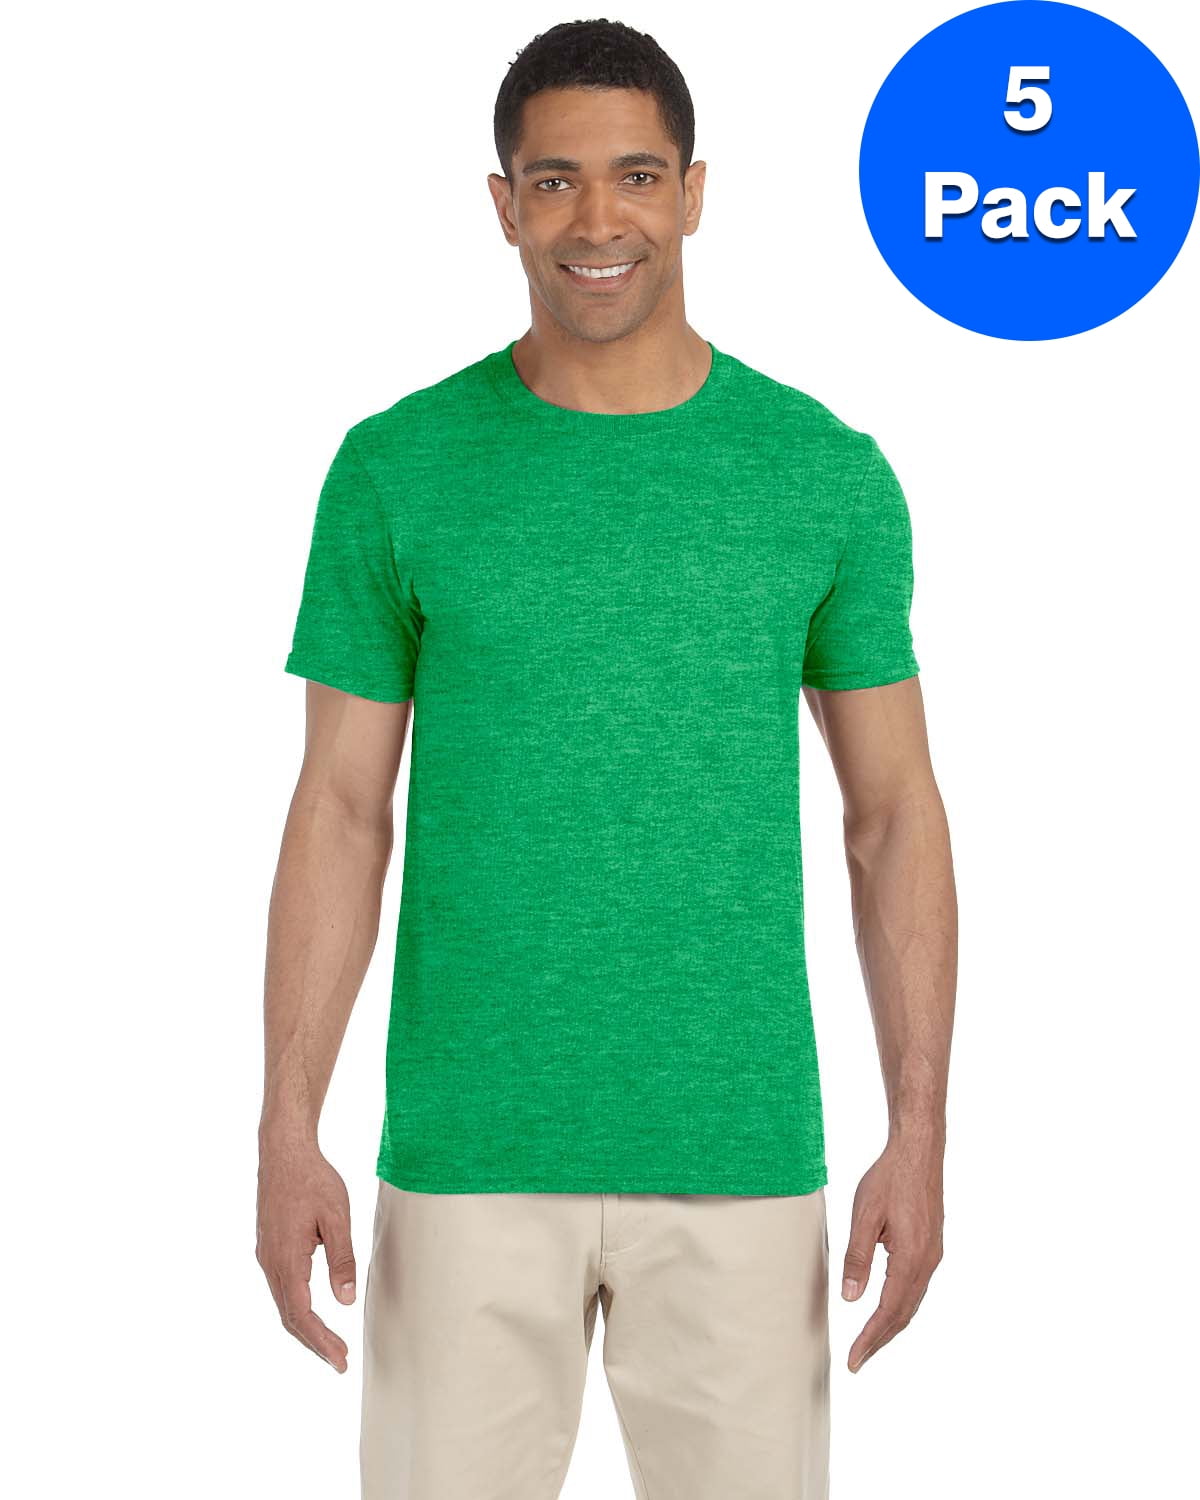 Mens 4.5 oz. SoftStyle T-Shirt 5 Pack - Walmart.com